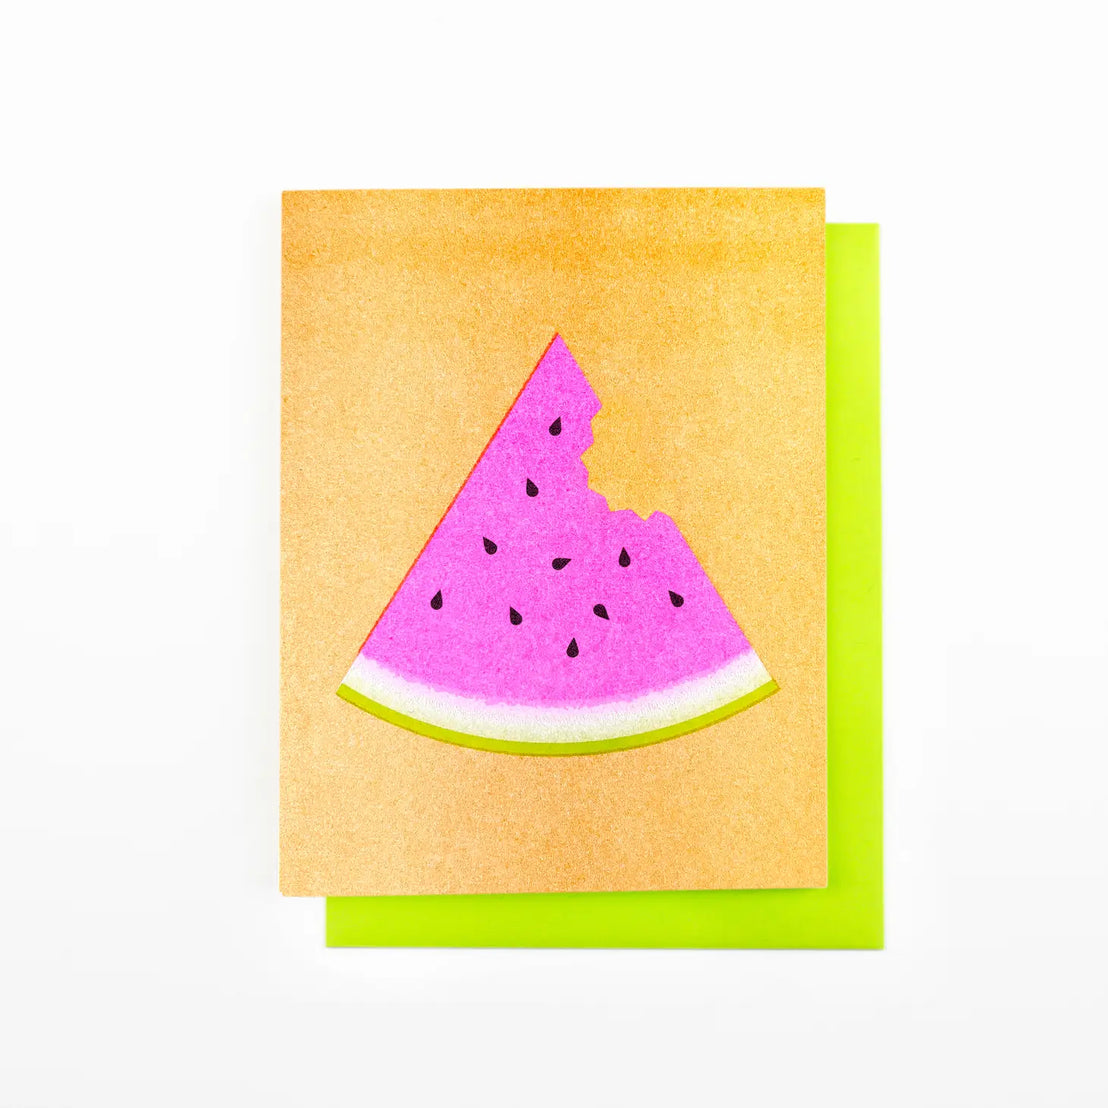 Watermelon, Next Chapter Studio